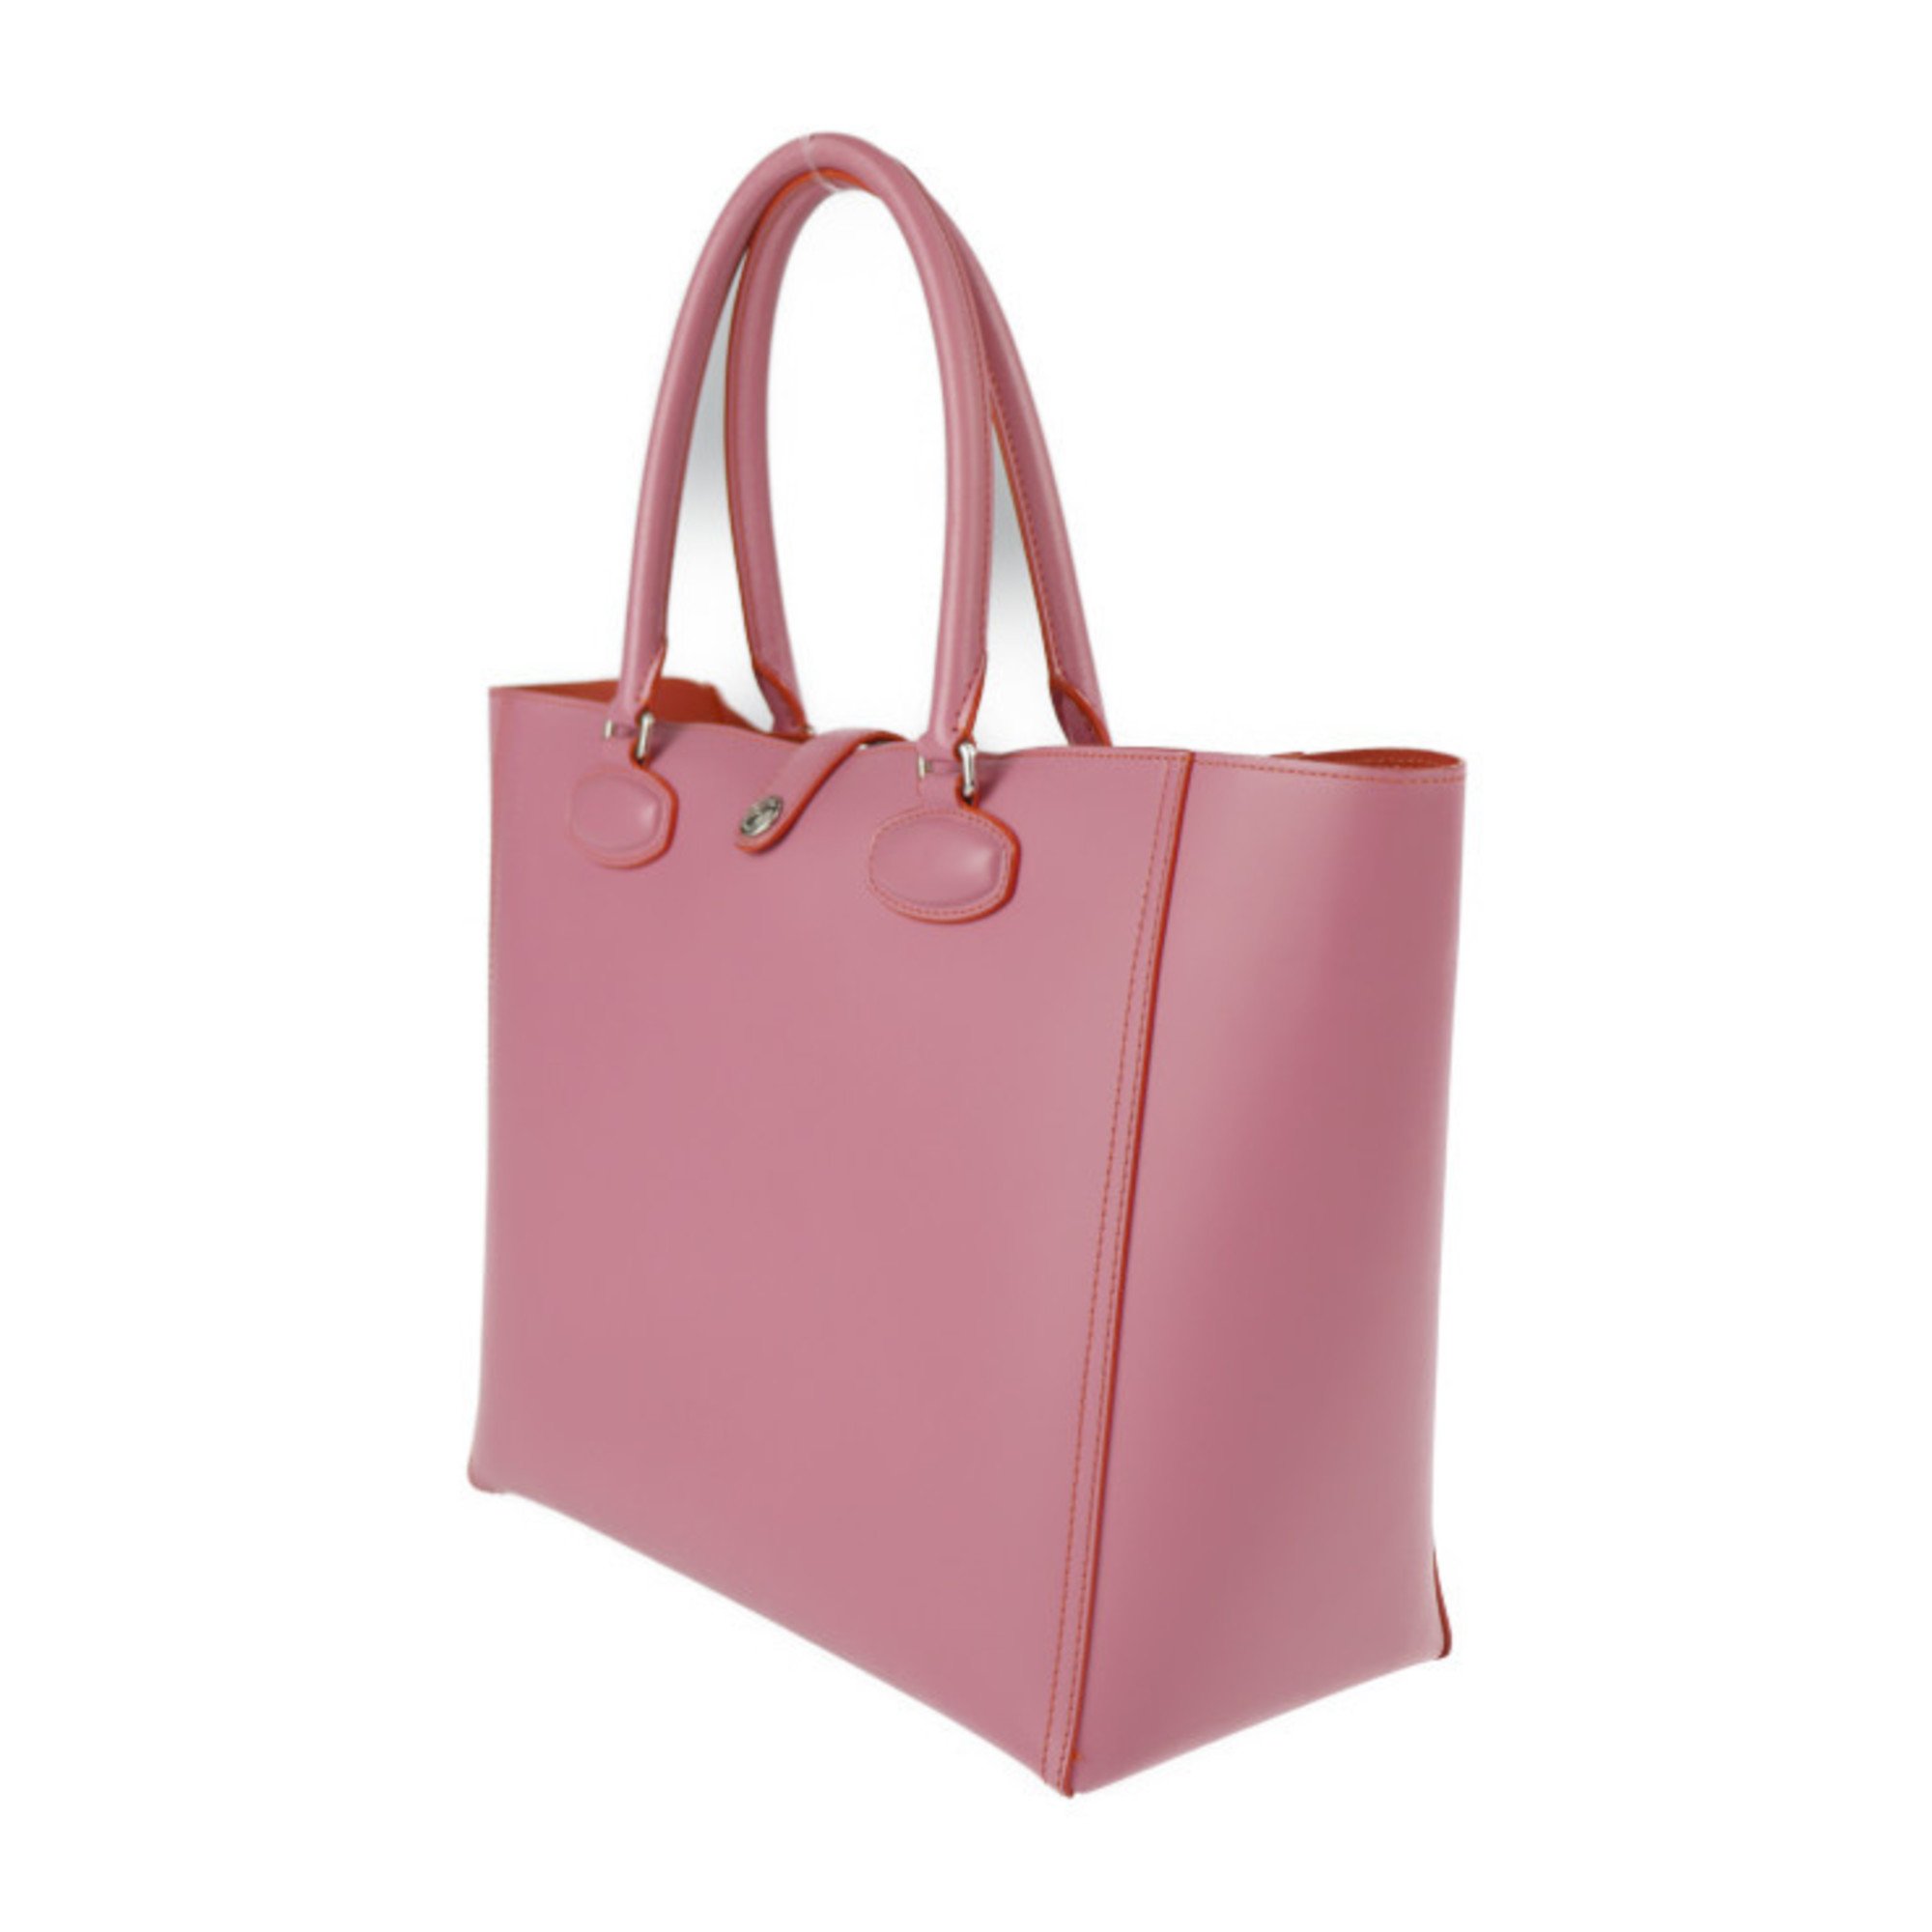 LOEWE Loewe Leo tote bag 364.71.G60 calf leather pink system orange silver hardware handbag anagram